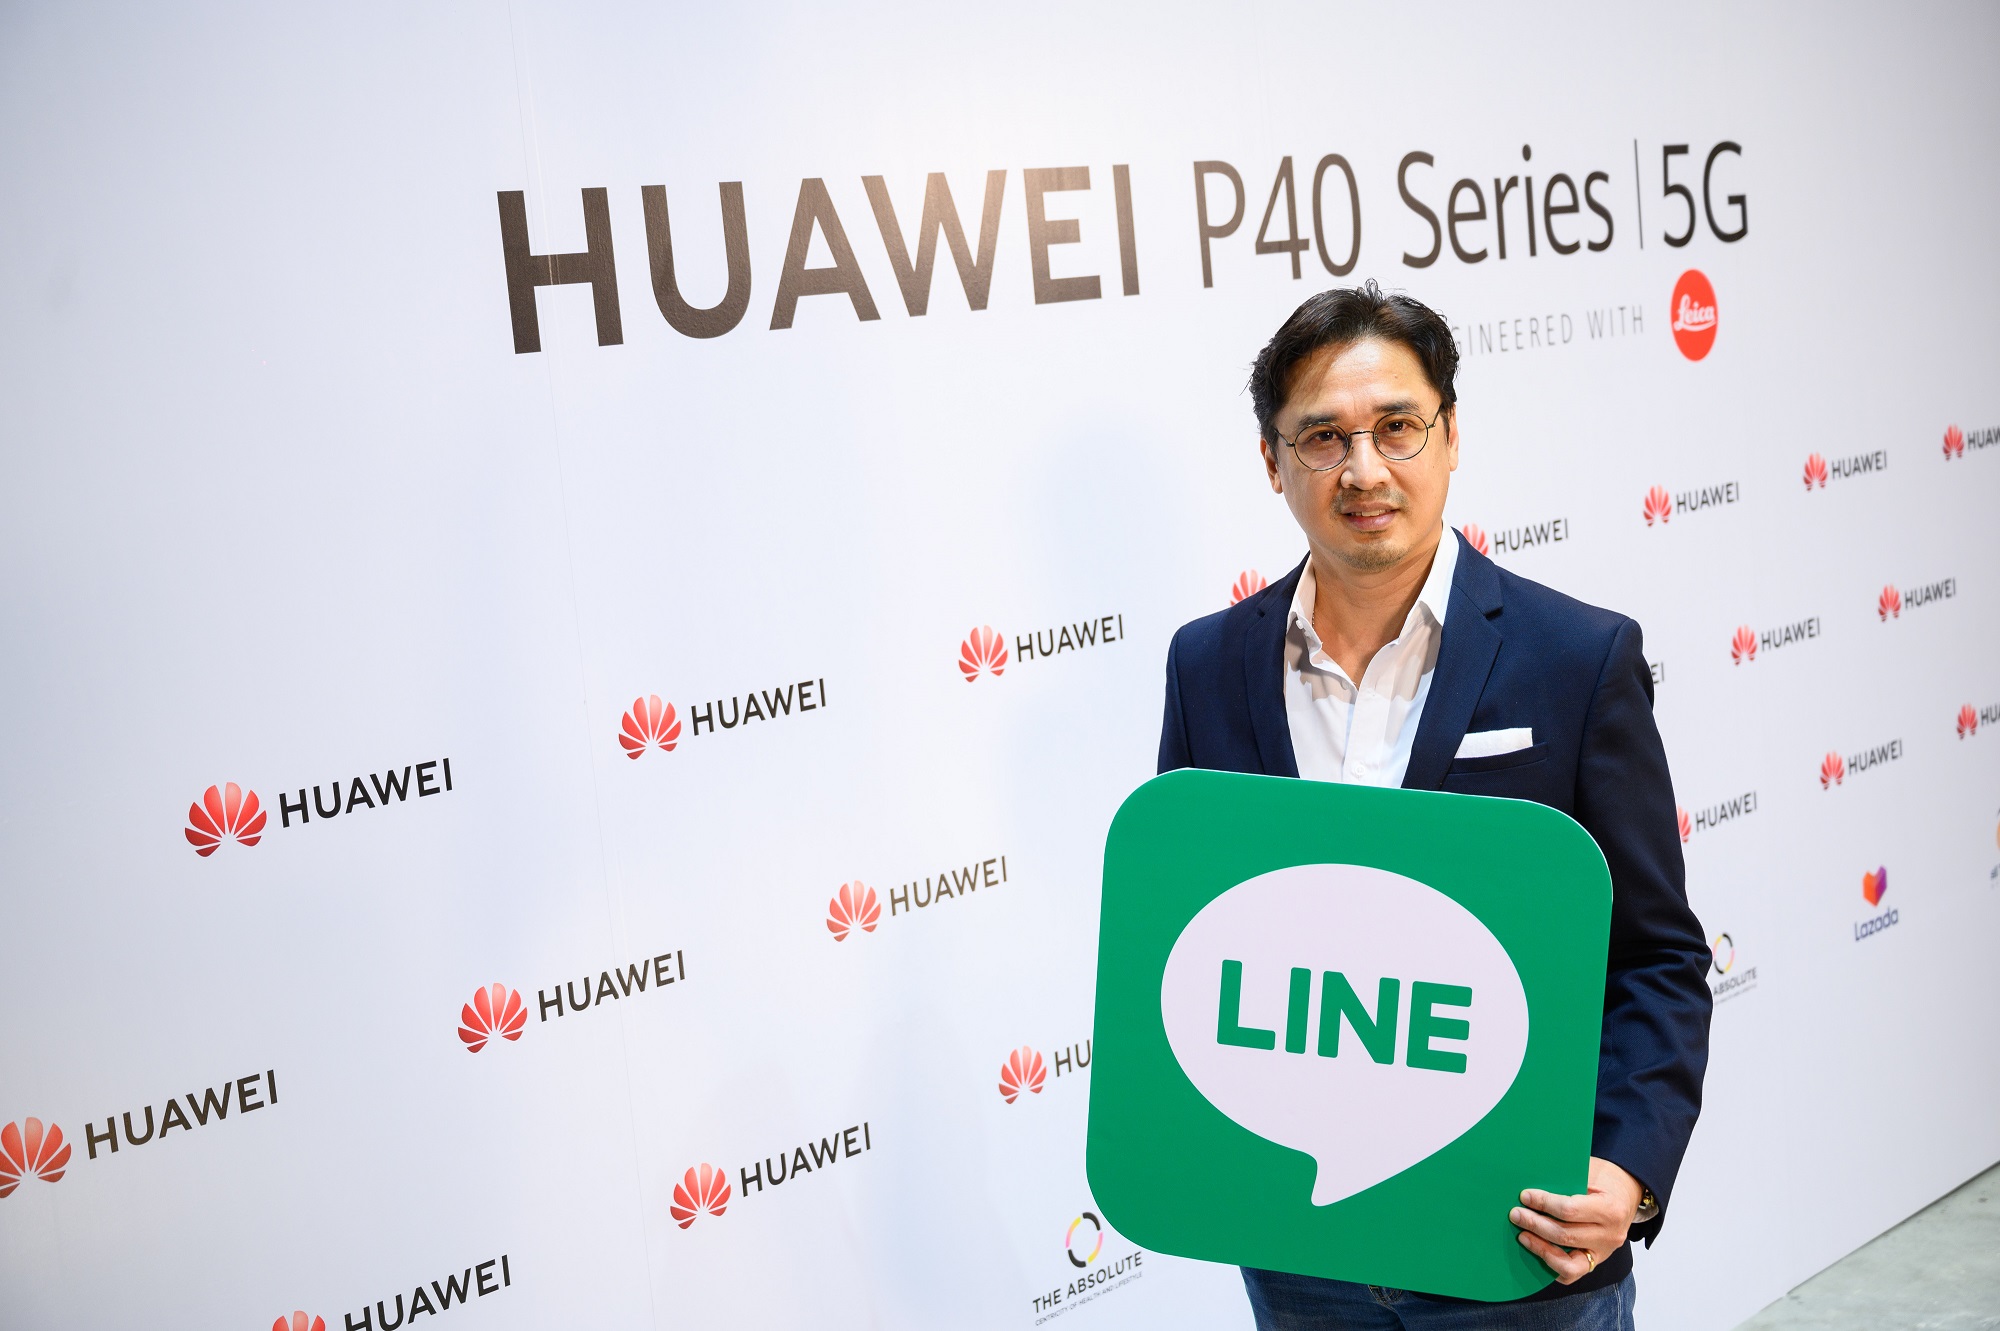 LINE จับมือ Huawei Thailand พัฒนาแอปฯ LINEรองรับการใช้งานบนอุปกรณ์ Huawei พร้อมให้ดาวน์โหลดได้ผ่านHuawei App Gallery เม.ย. นี้